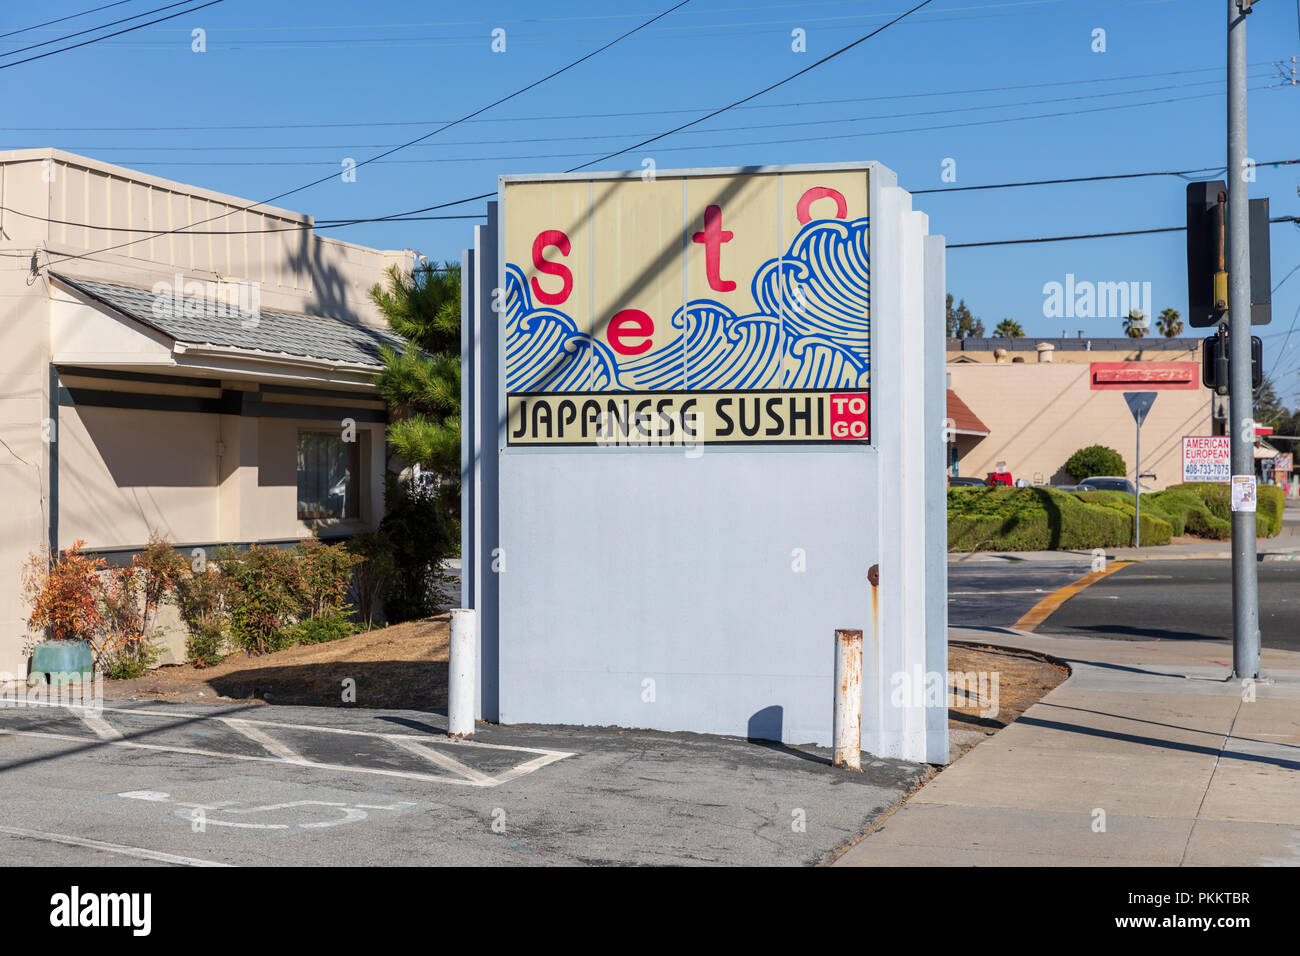 Seto – Japanese Sushi – To Go, sign; Sunnyvale, California, USA Stock Photo